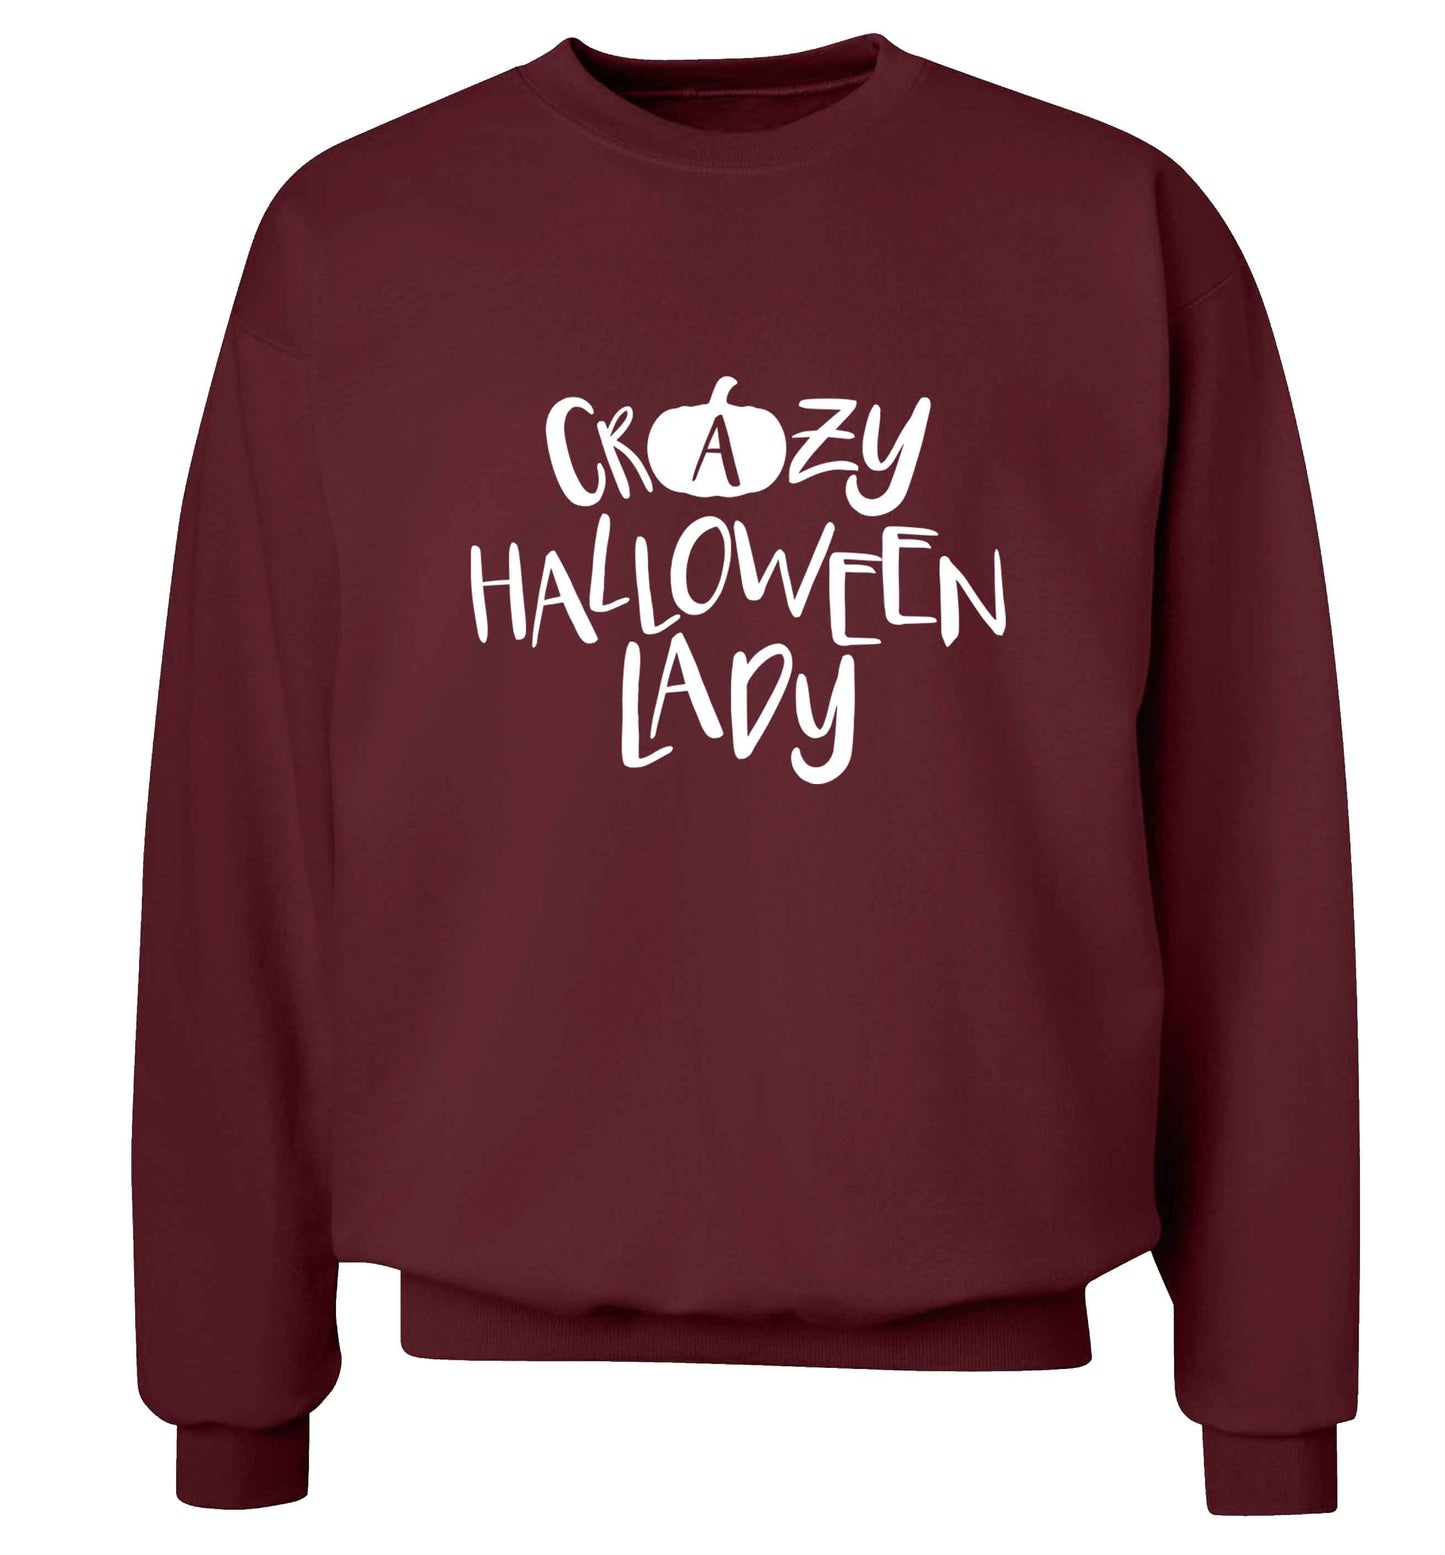 Crazy halloween lady adult's unisex maroon sweater 2XL